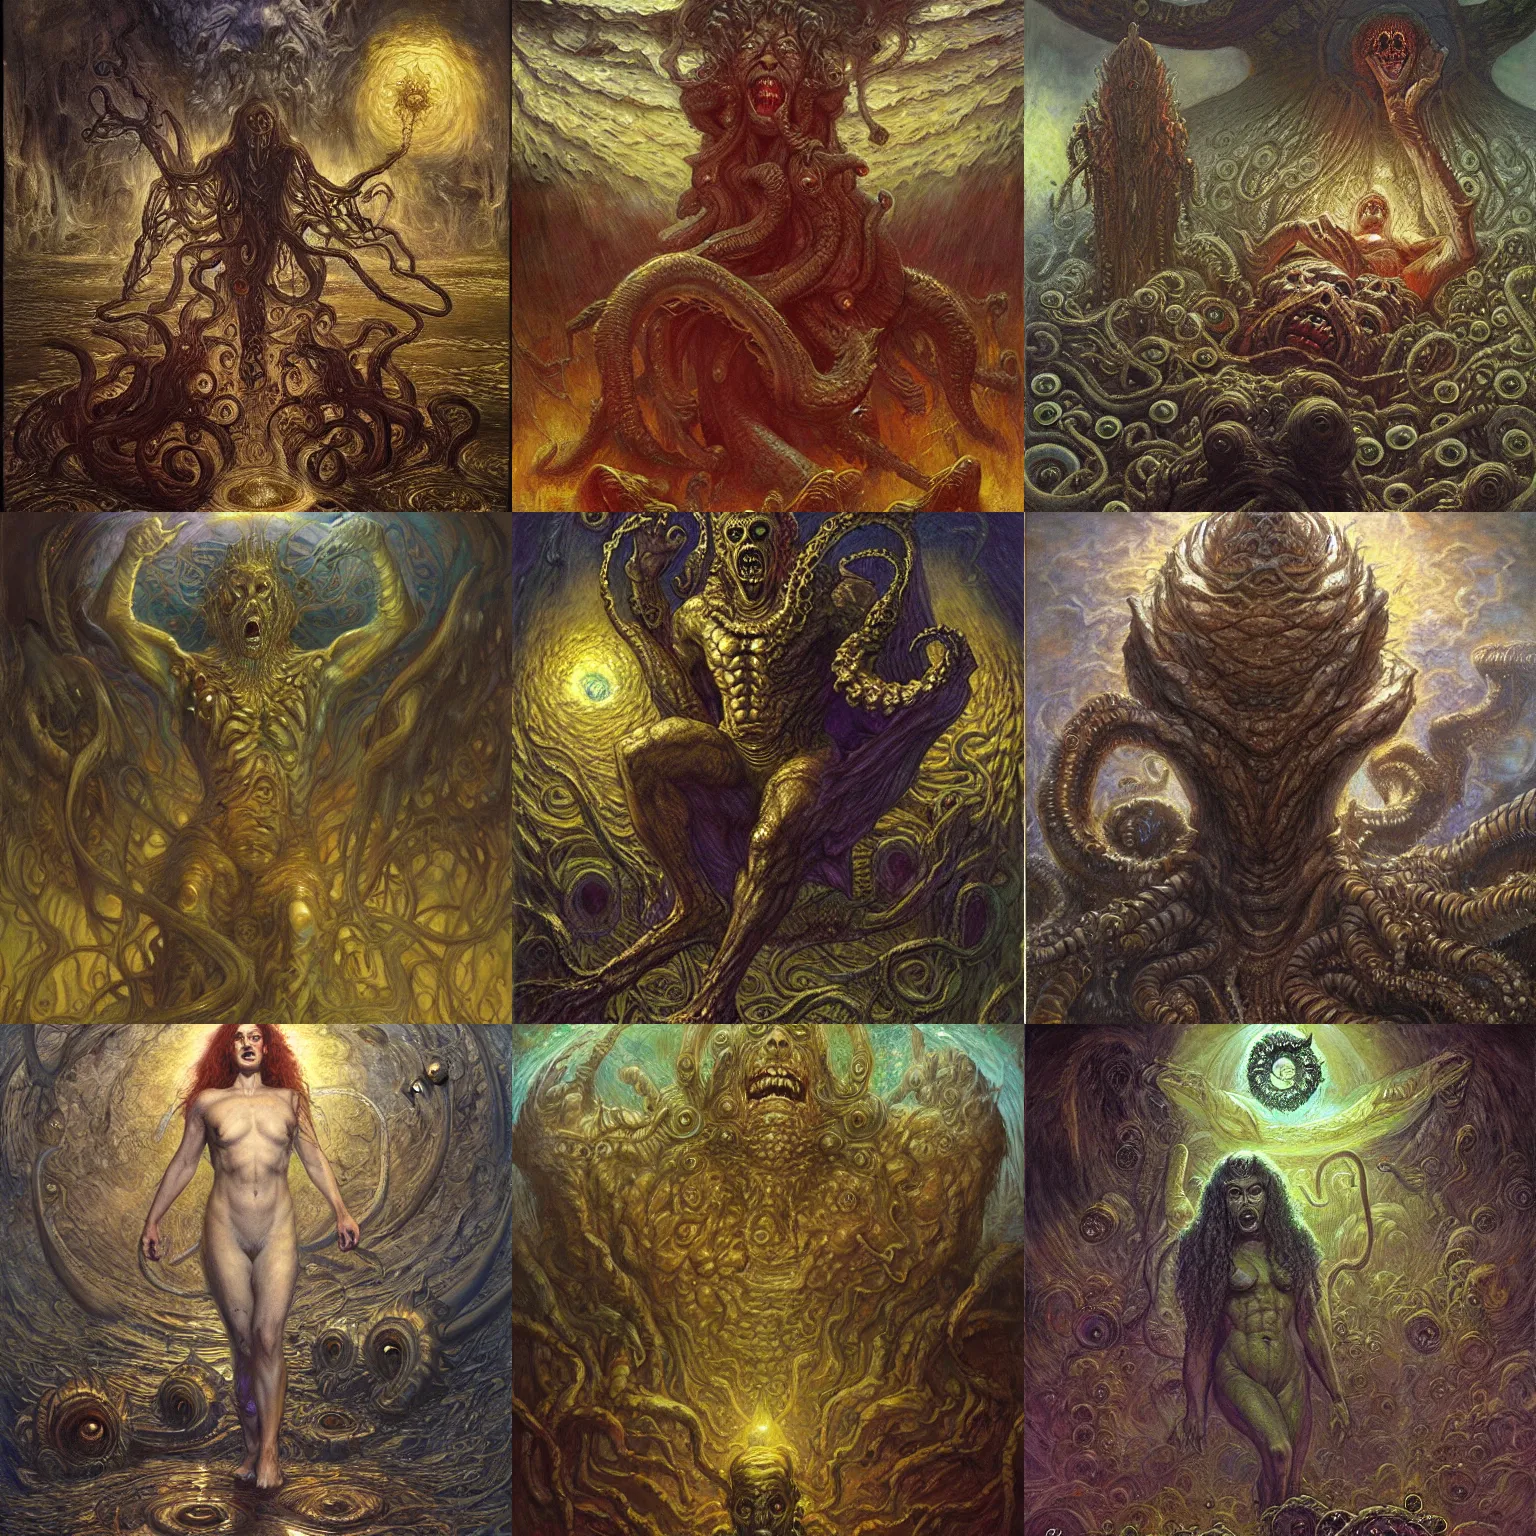 Prompt: elder god awakening, horror painting by donato giancola, dore, ilya repin, hp lovecraft, artgerm, trending on artstation